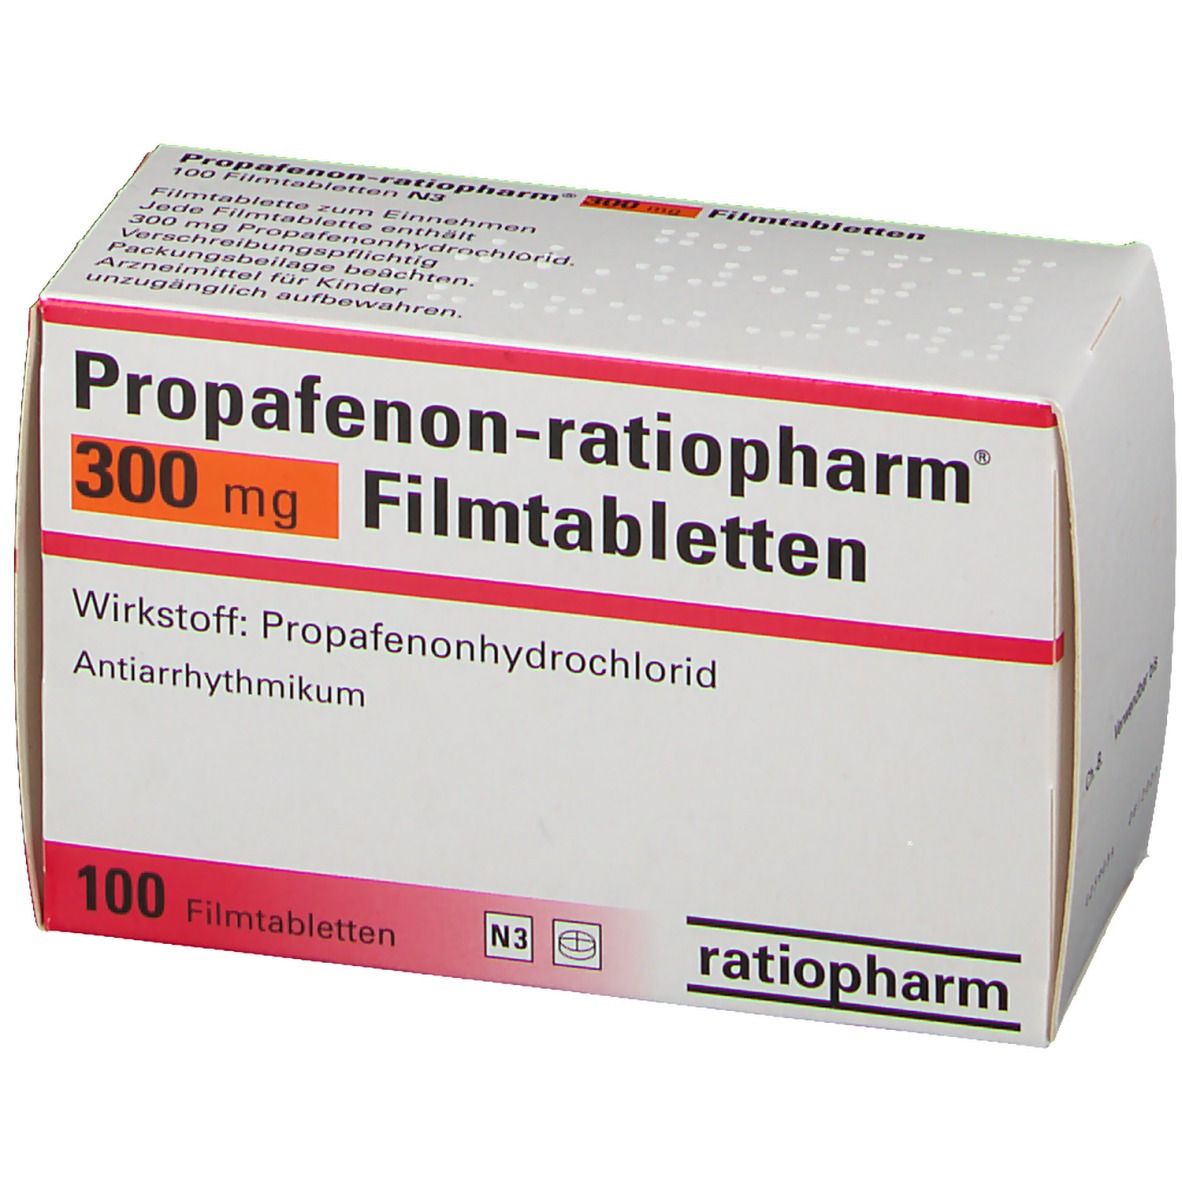 Propafenon-ratiopharm® 300 mg